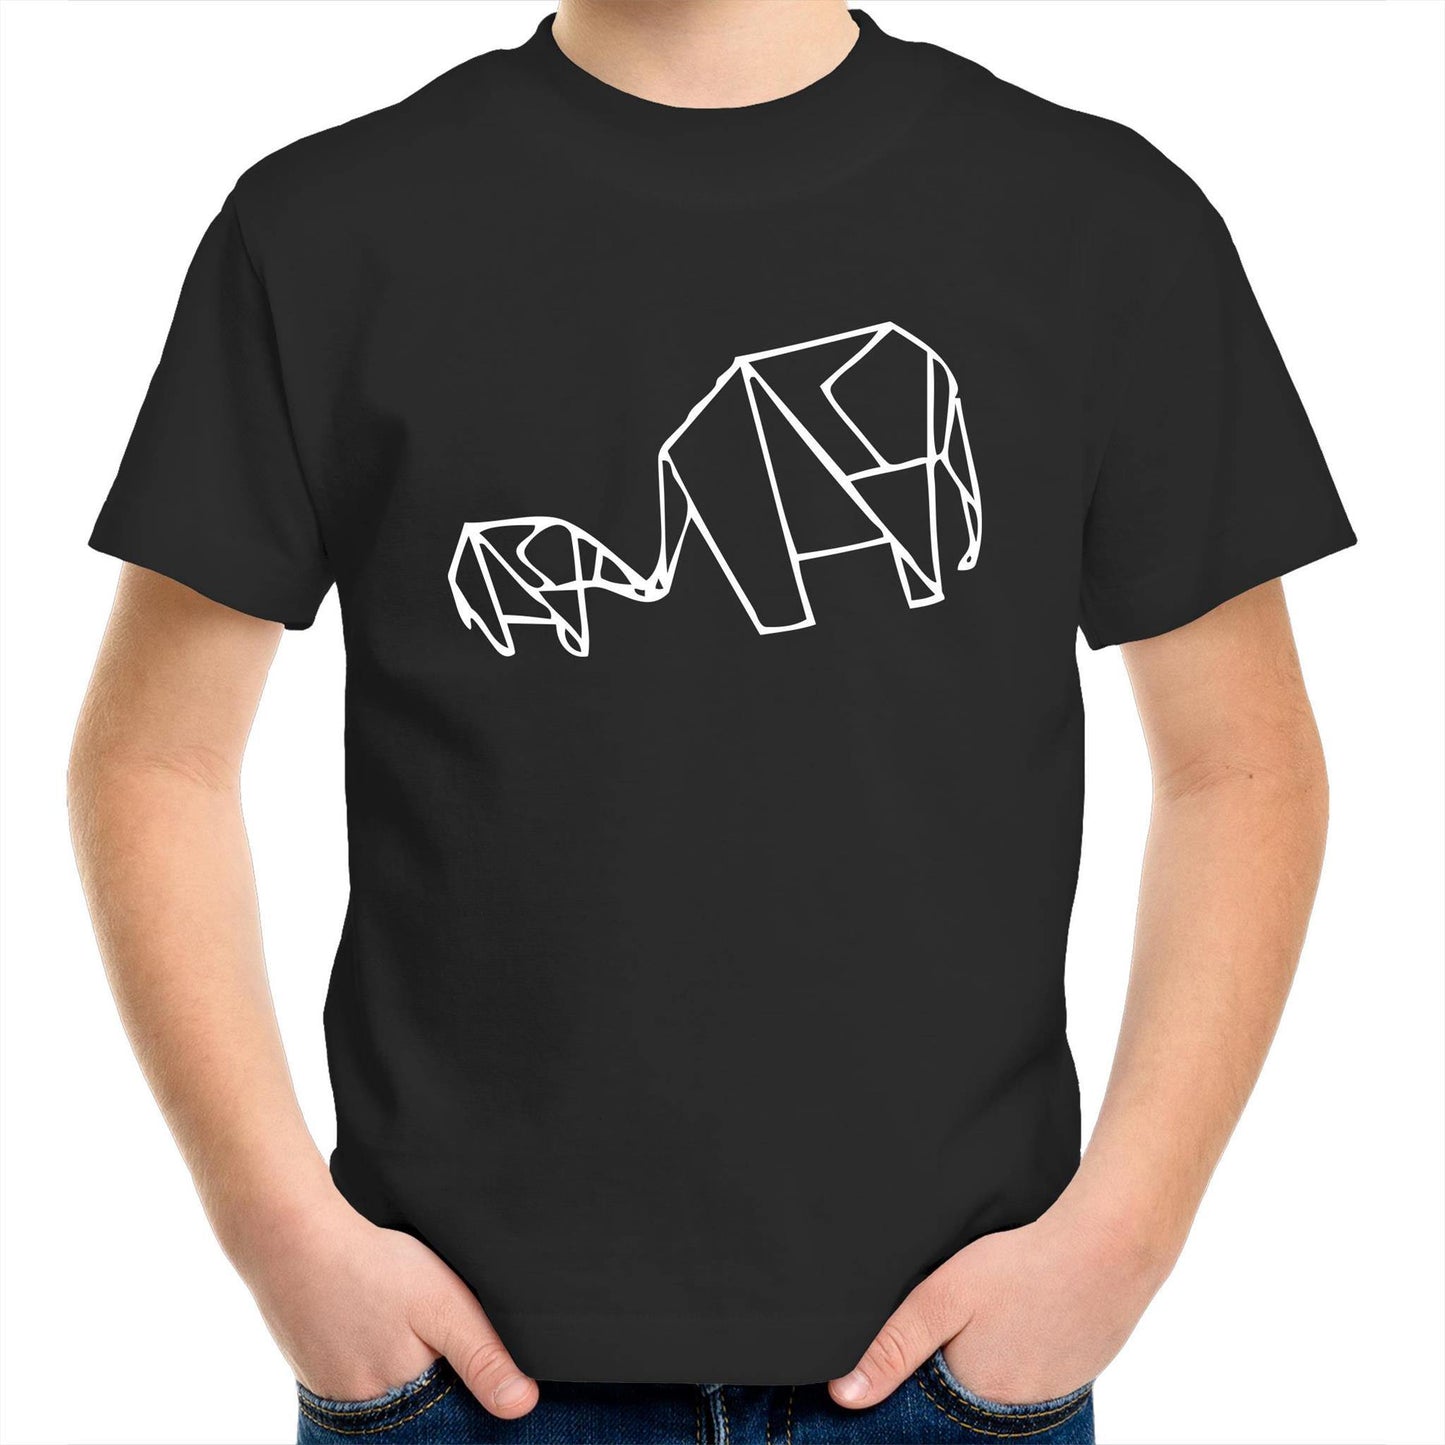 Origami Elephant - Kids Youth Crew T-Shirt Black Kids Youth T-shirt animal